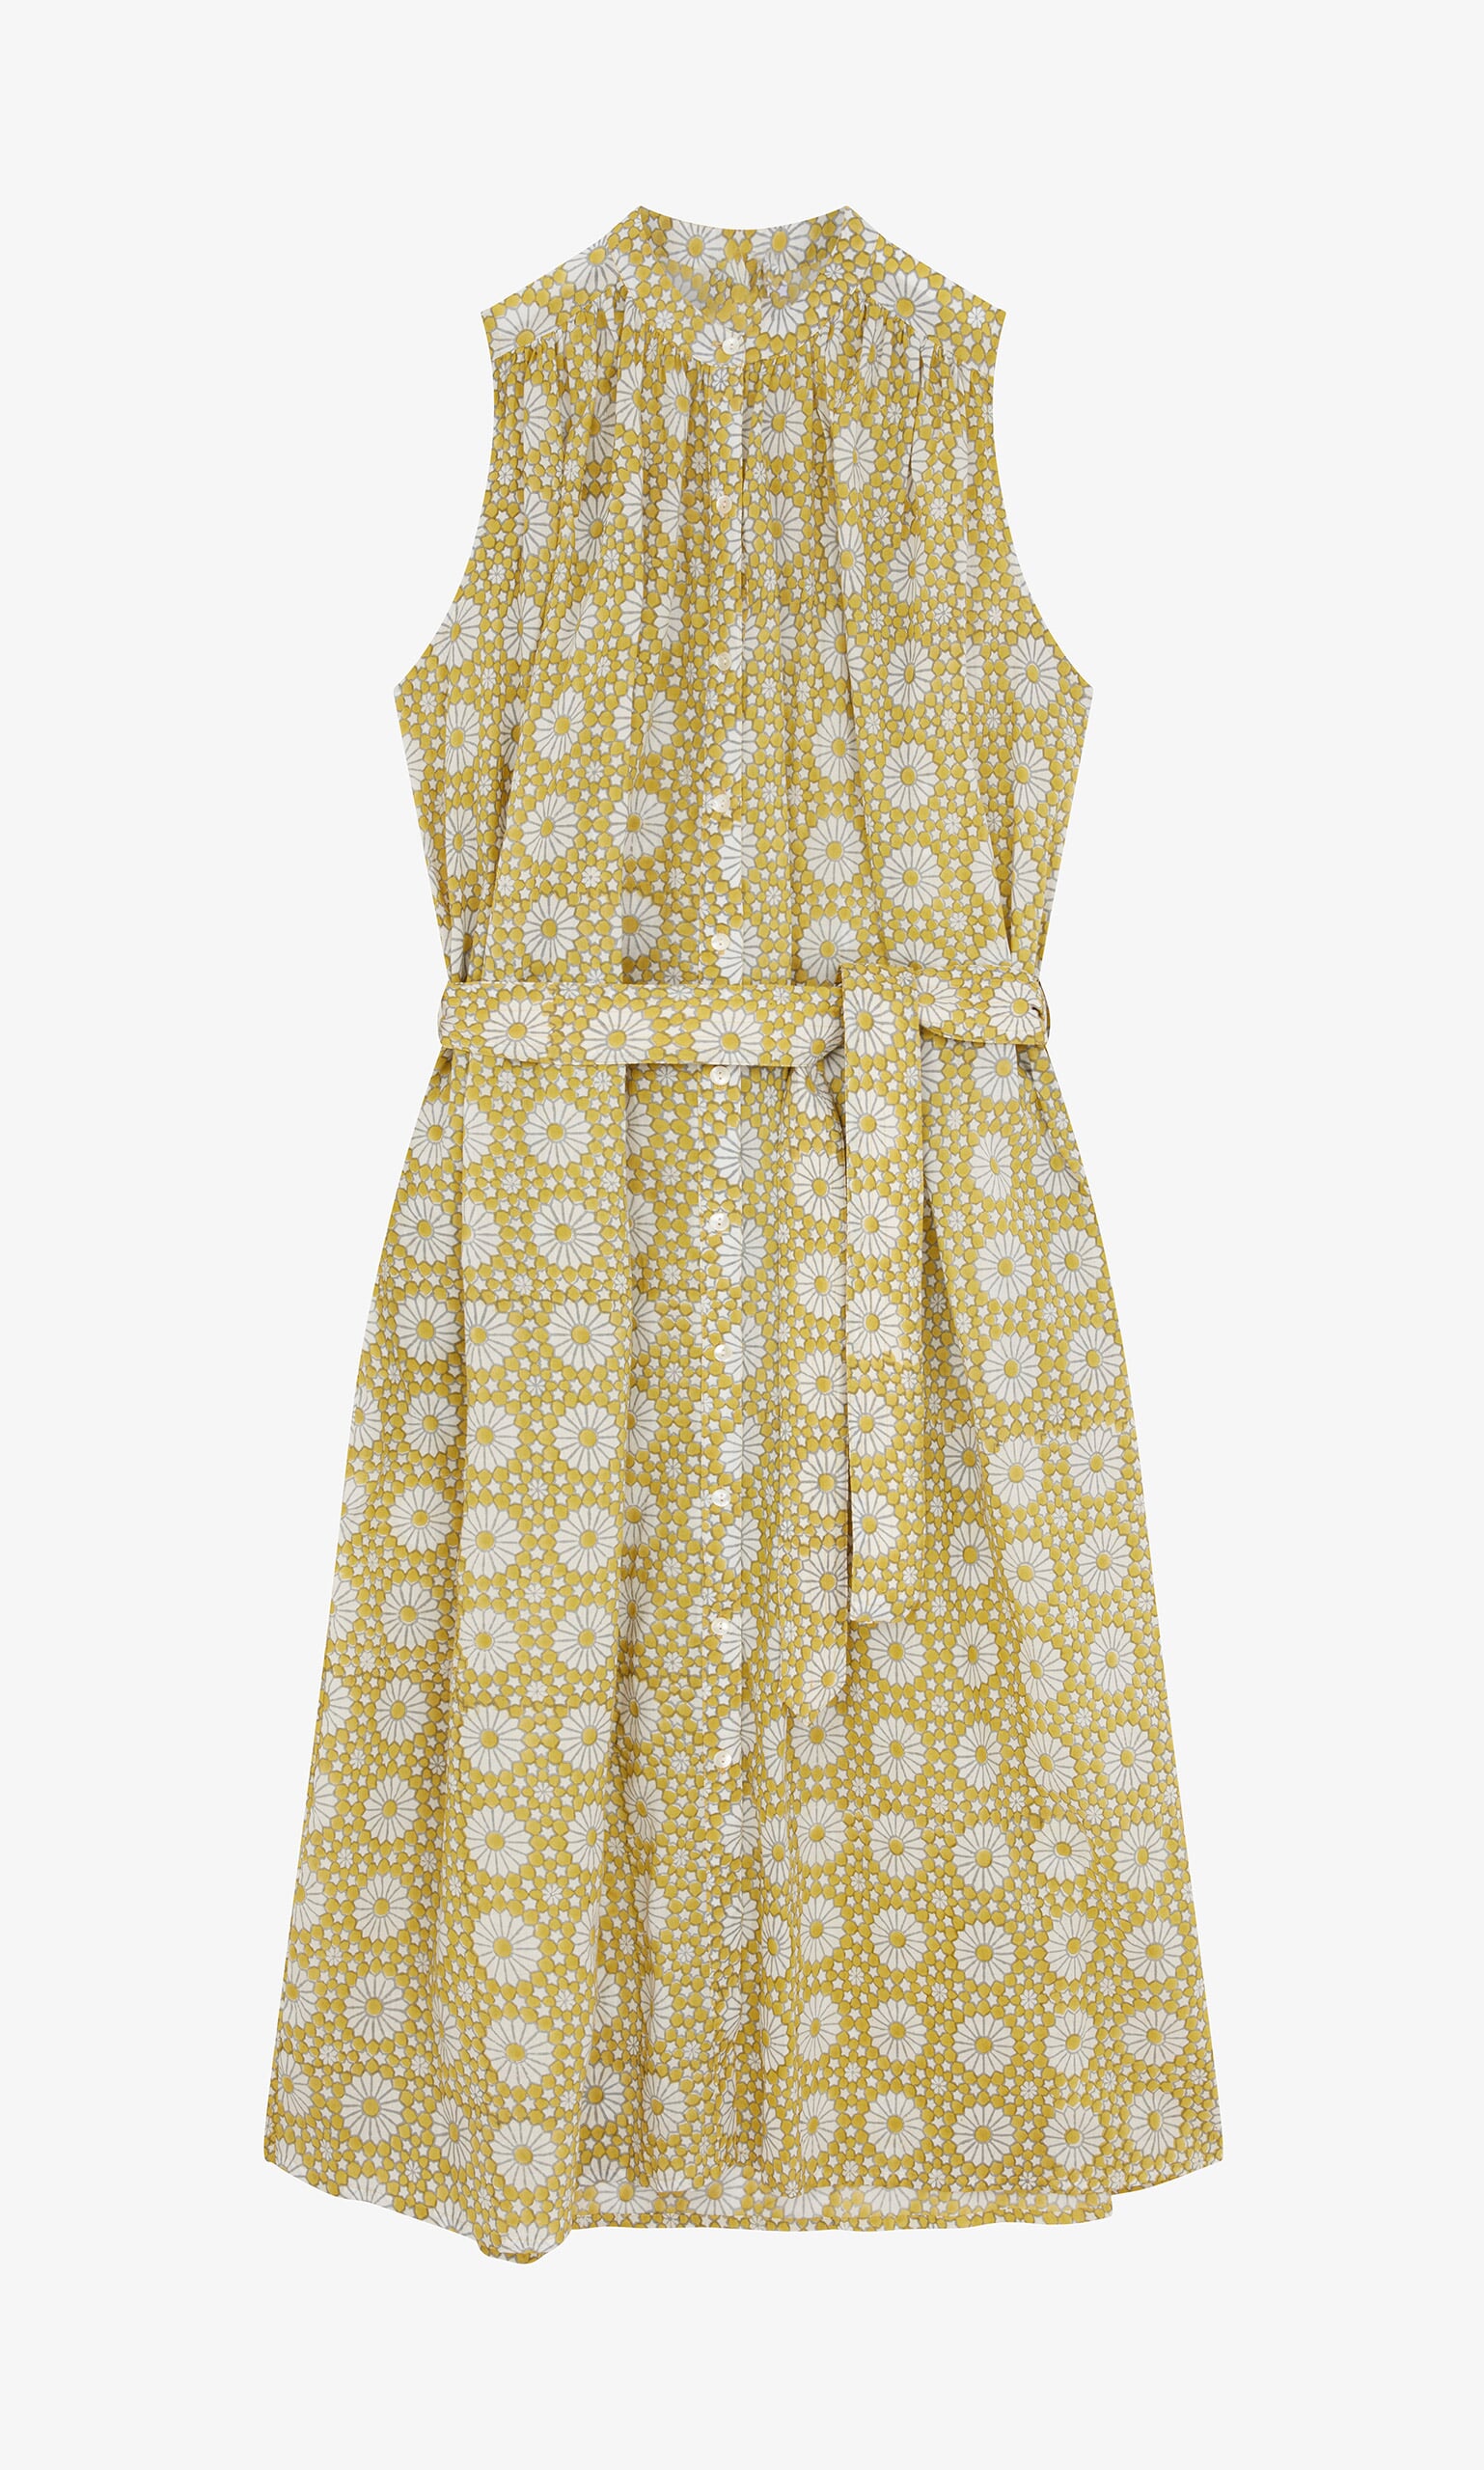 Daisy print dress - Plümo Ltd